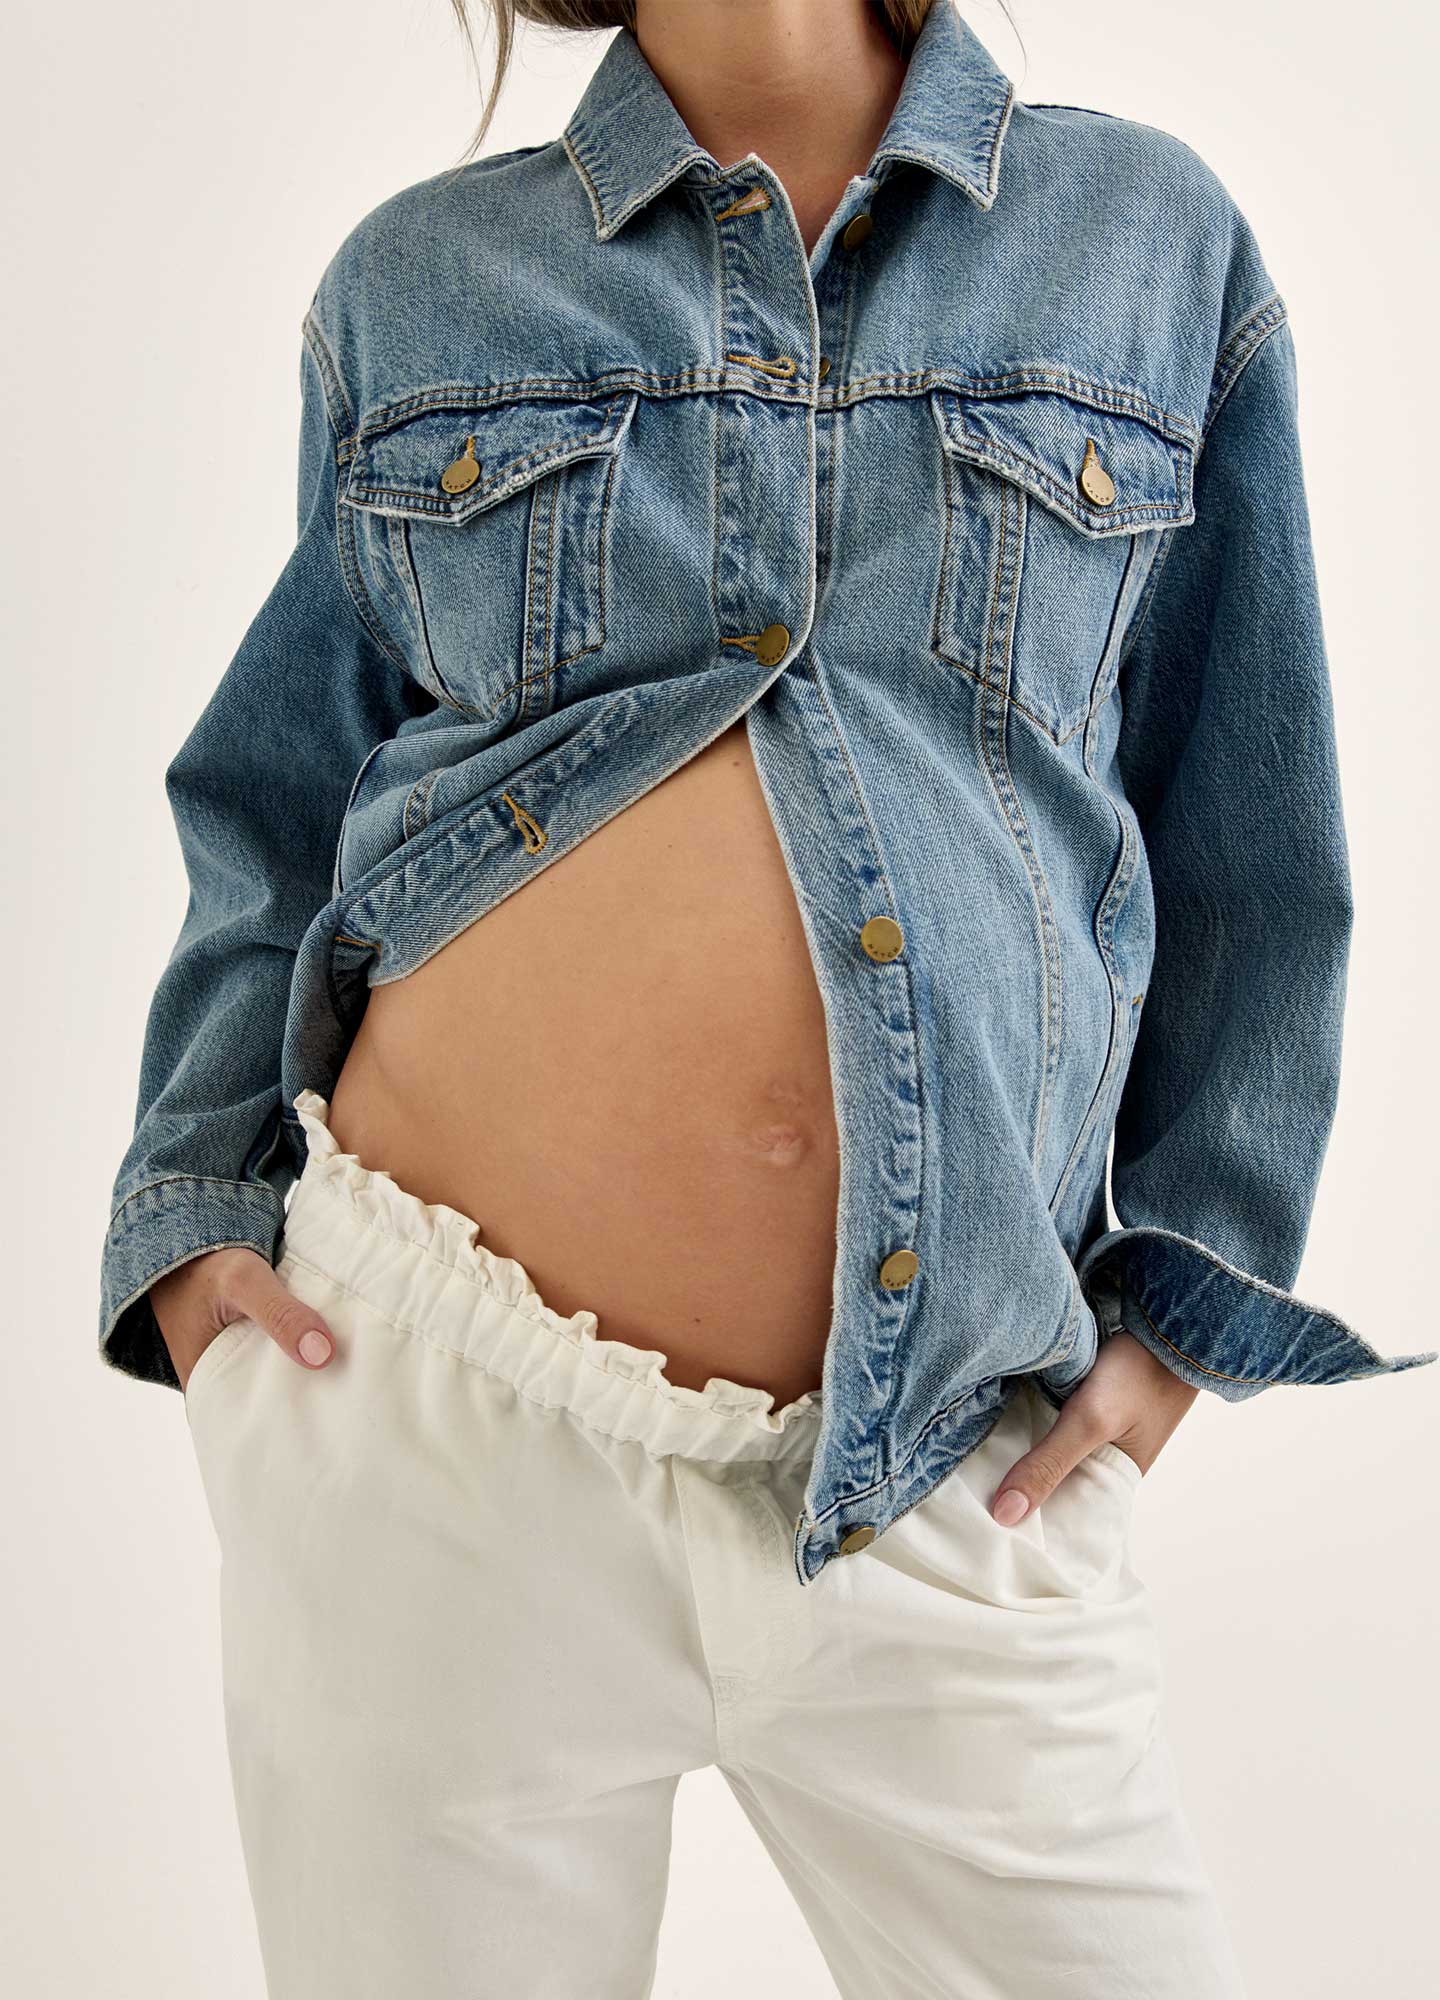 pregnant belly peaking through a denim jacket